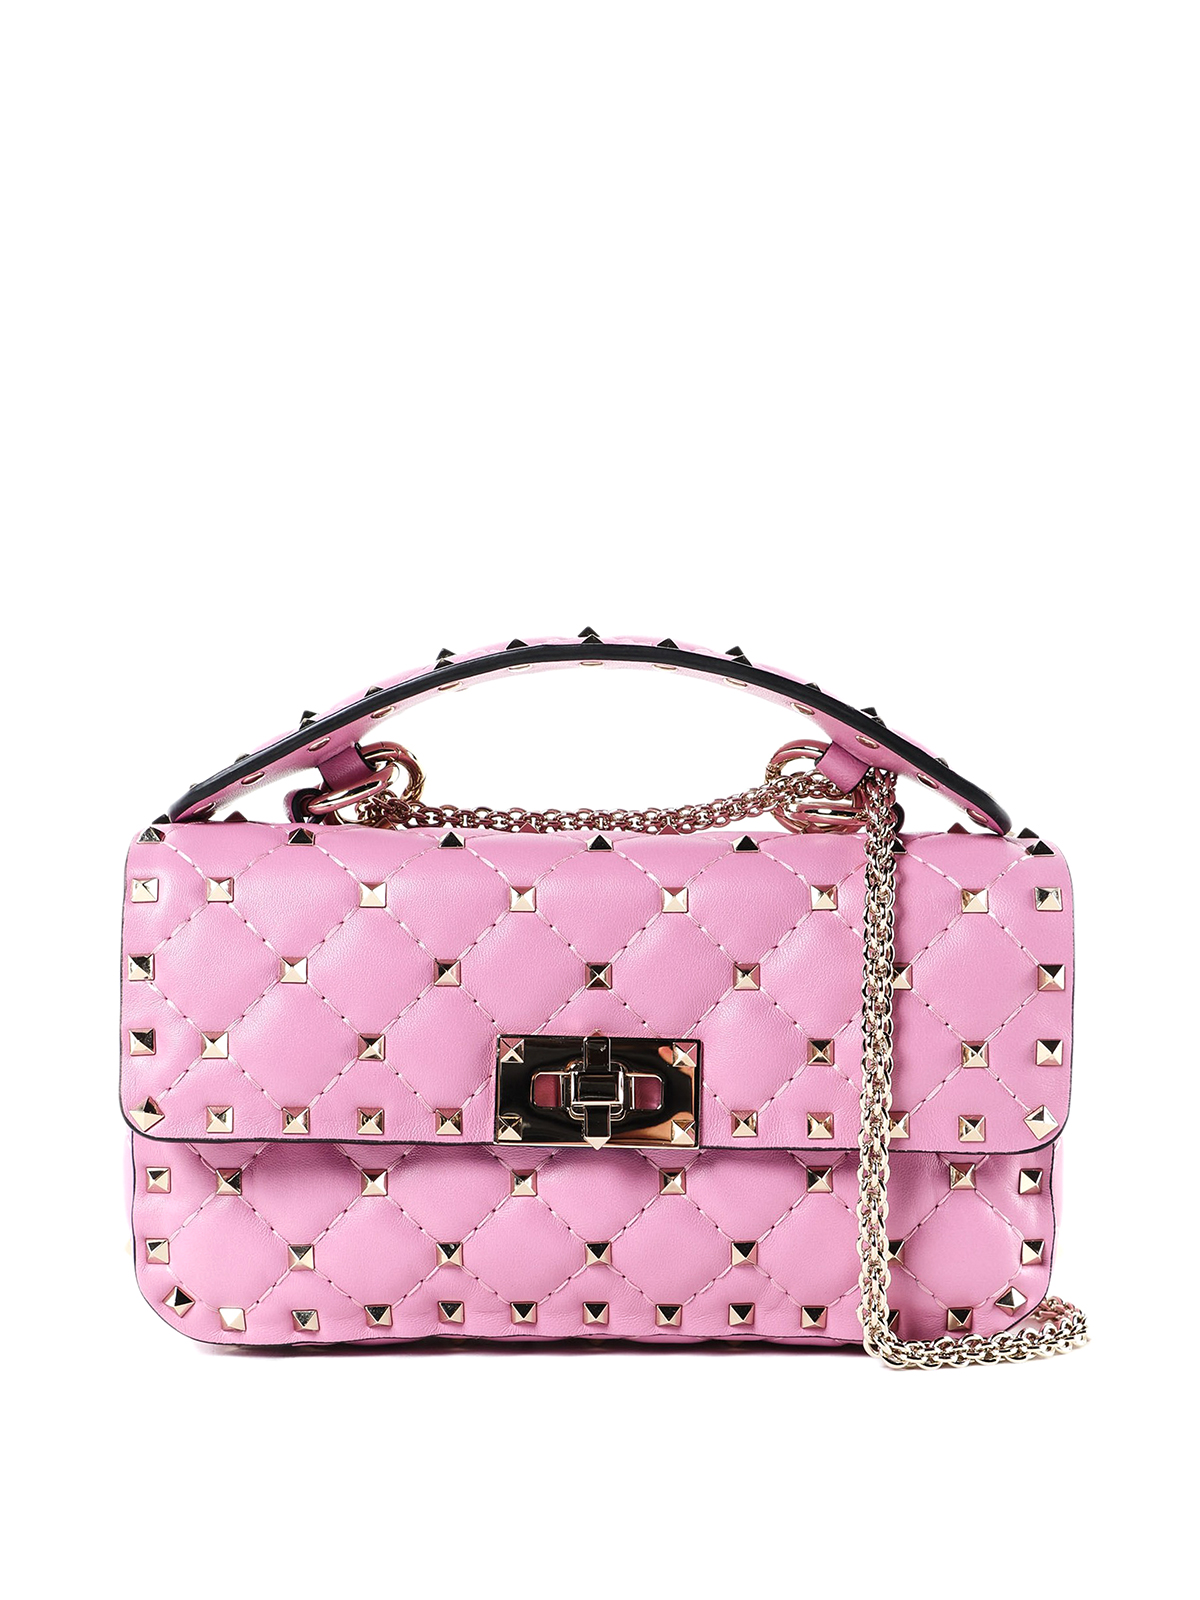 VALENTINO GARAVANI: Rockstud bag in quilted nappa leather - Pink